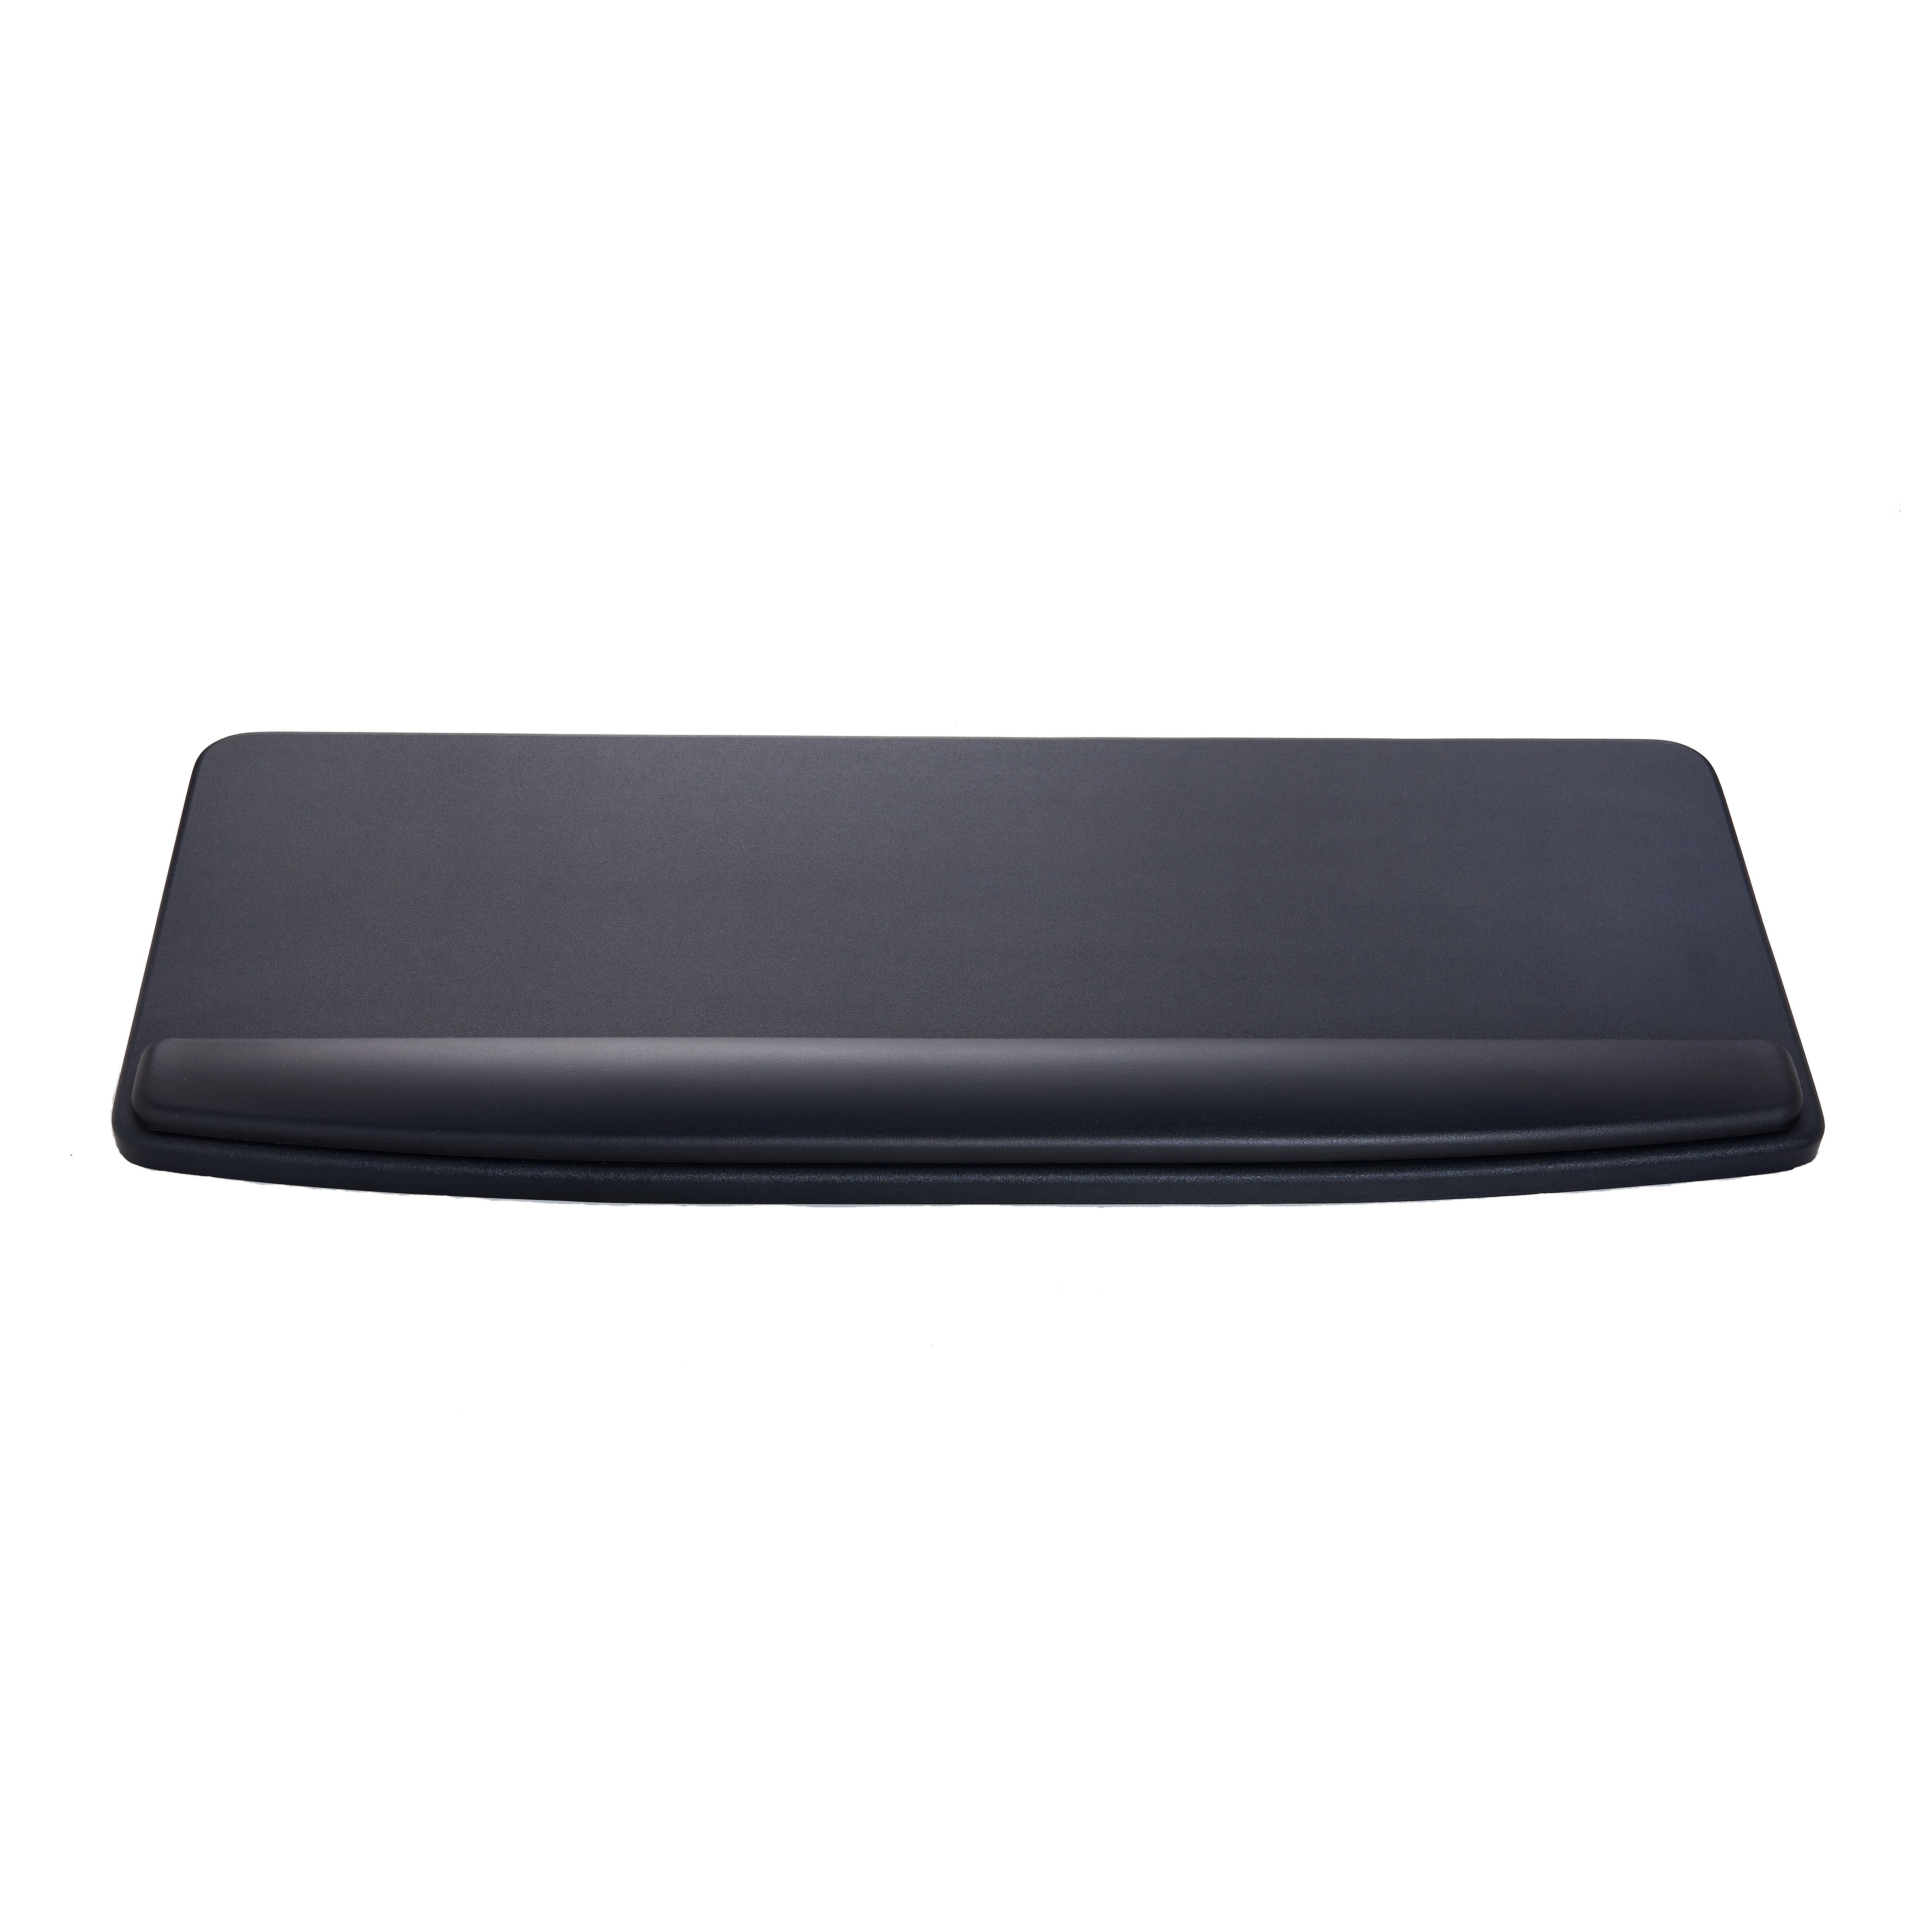 EZ2006 (EZ0033TRAY) black tray helps your posture